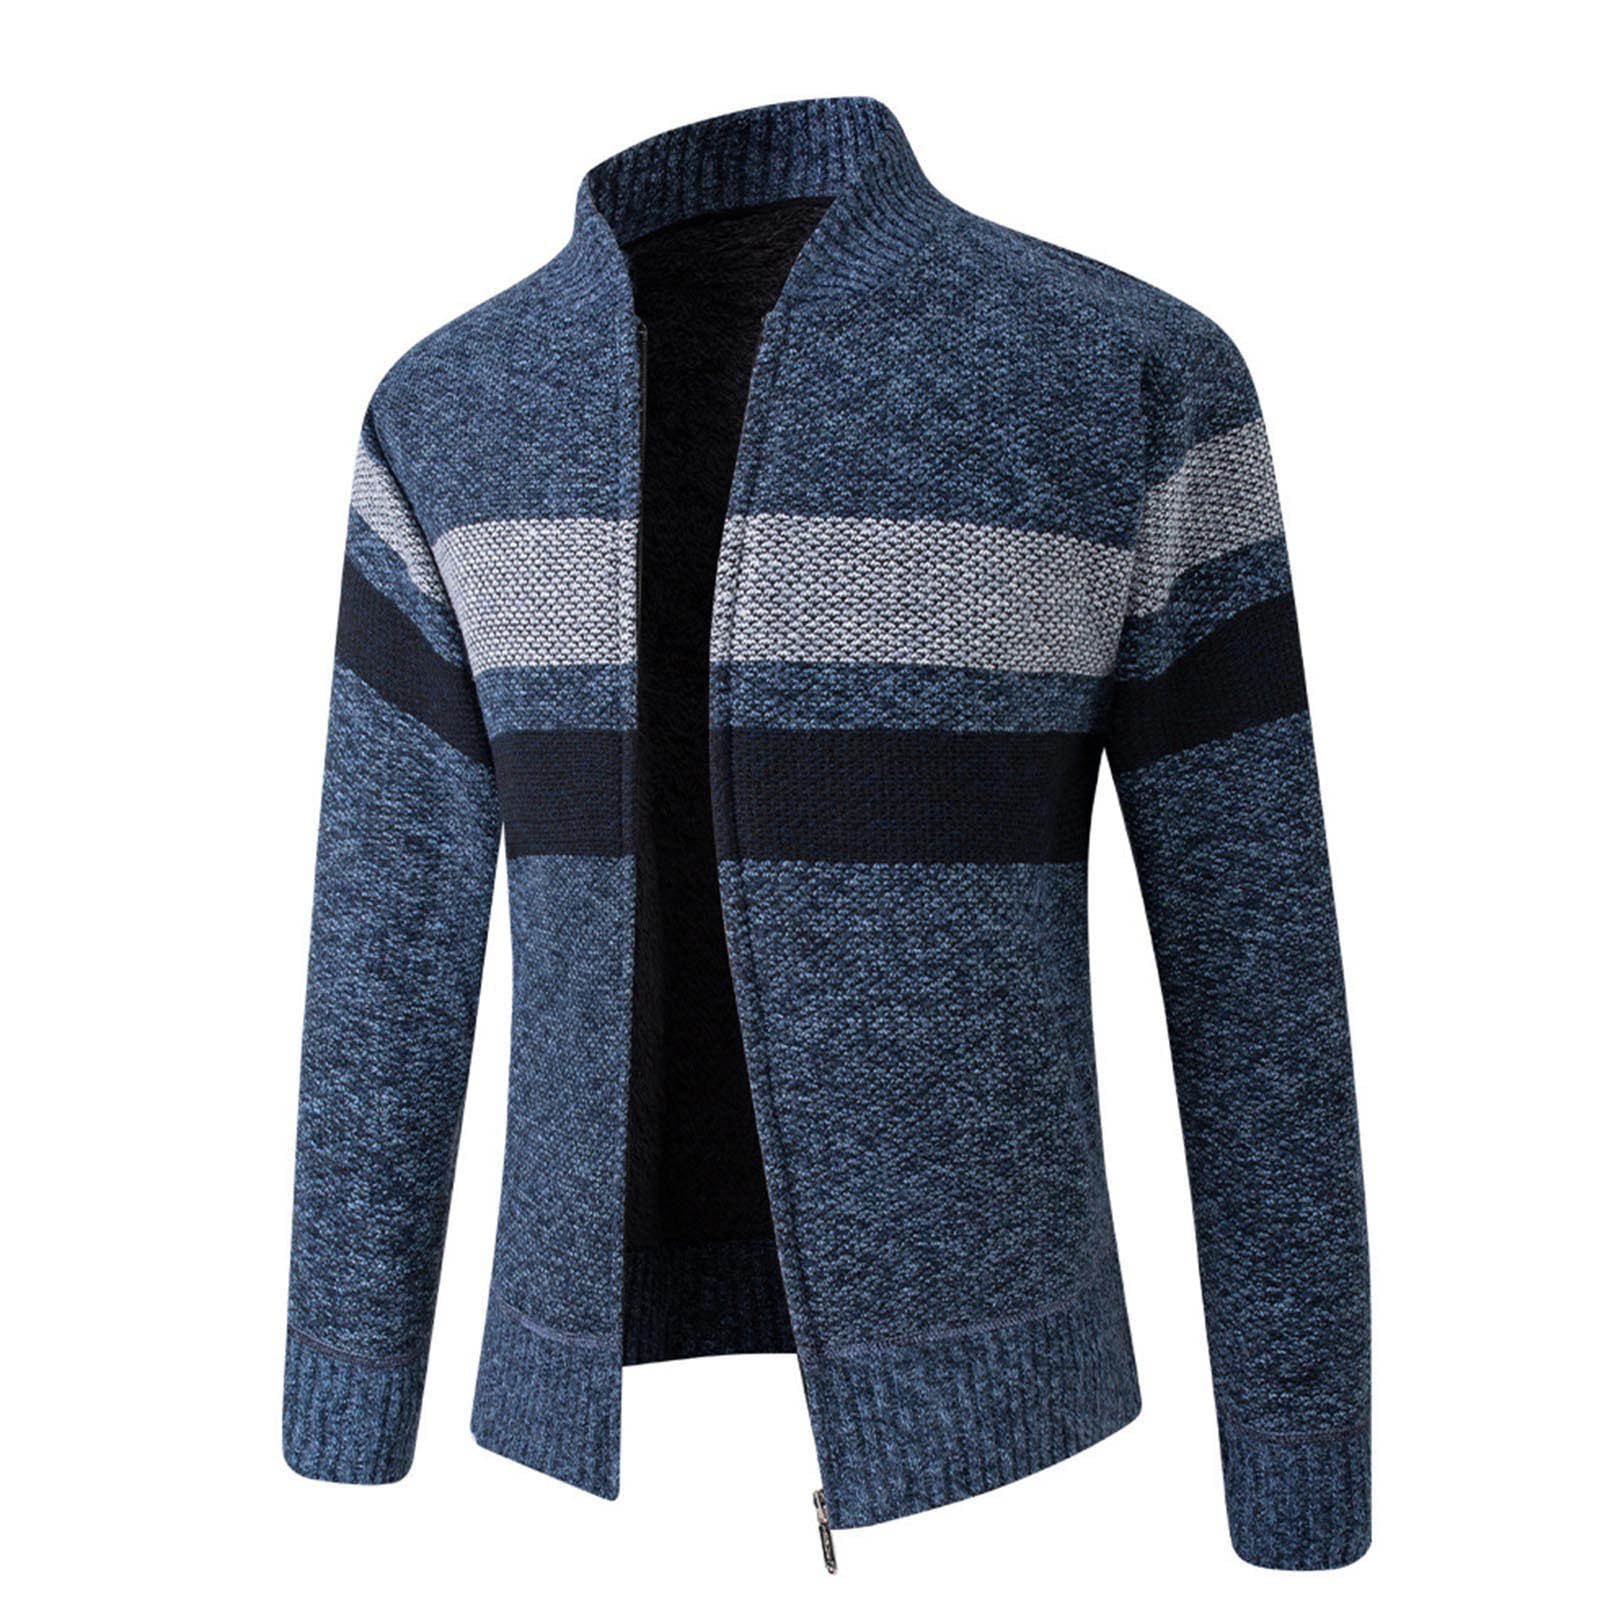 Men's Cardigan Sweaters Full Zip Up Stand Collar Slim Fit Casual ...